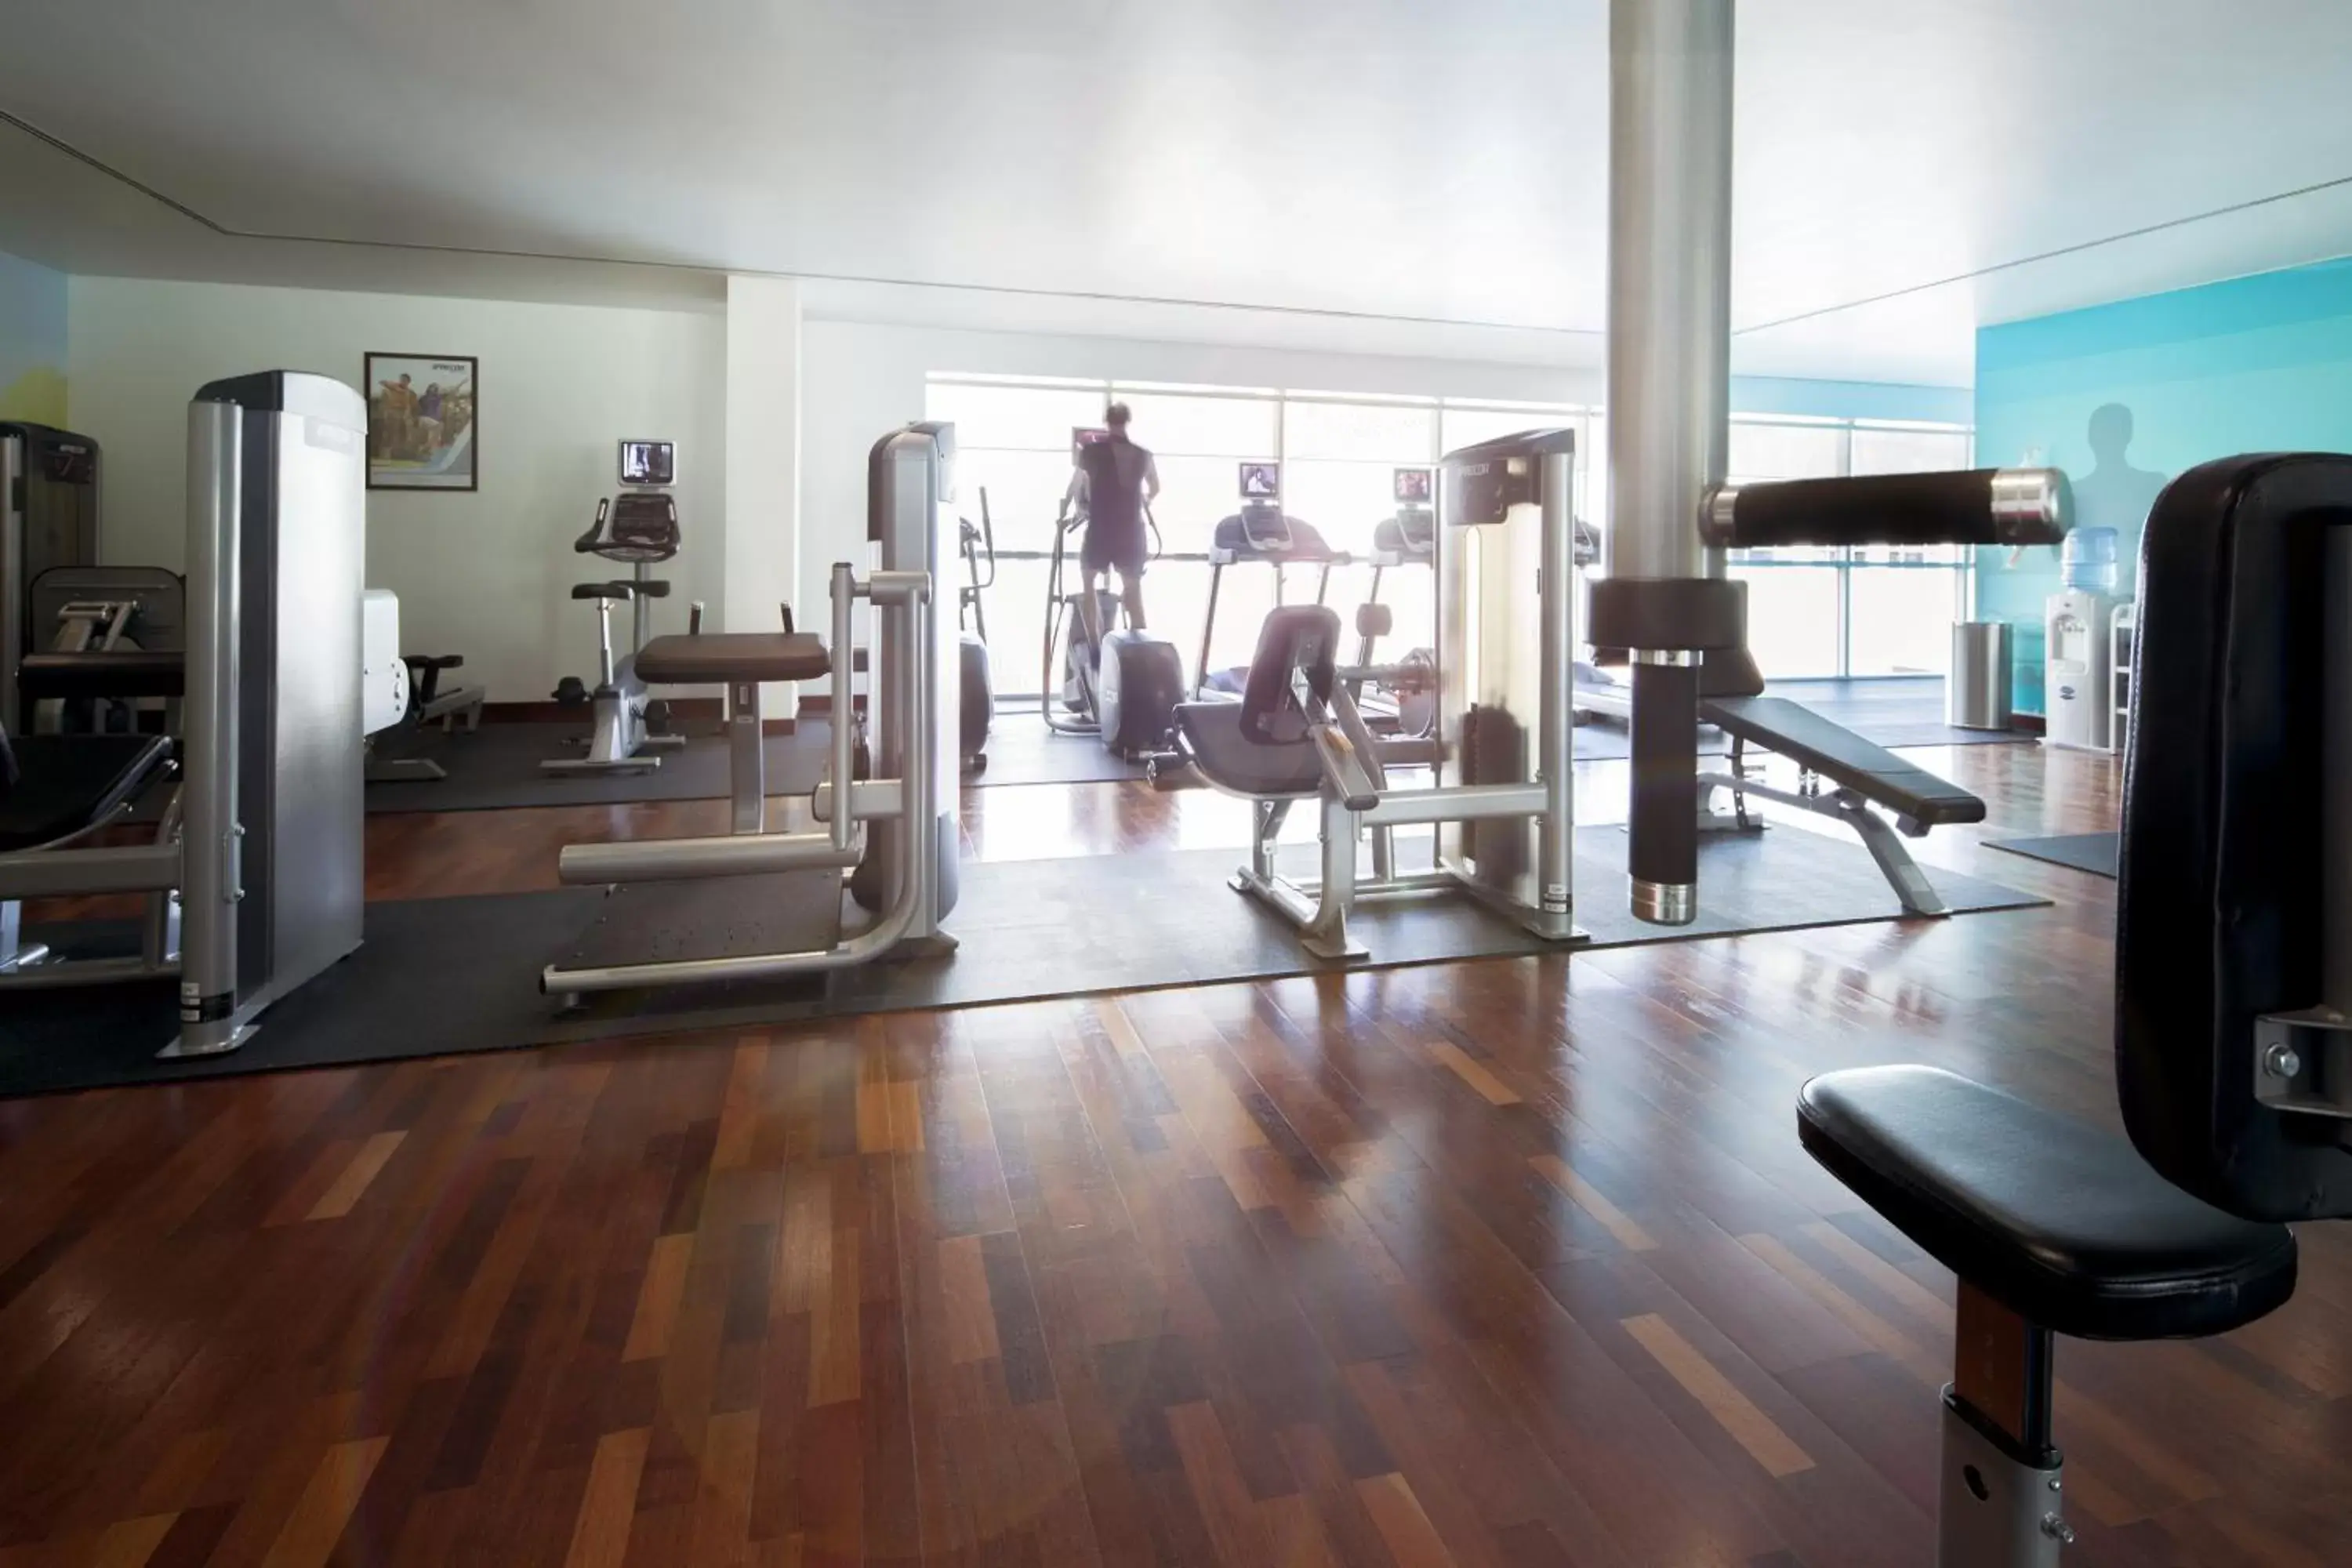 Fitness centre/facilities, Fitness Center/Facilities in Novotel World Trade Centre Dubai